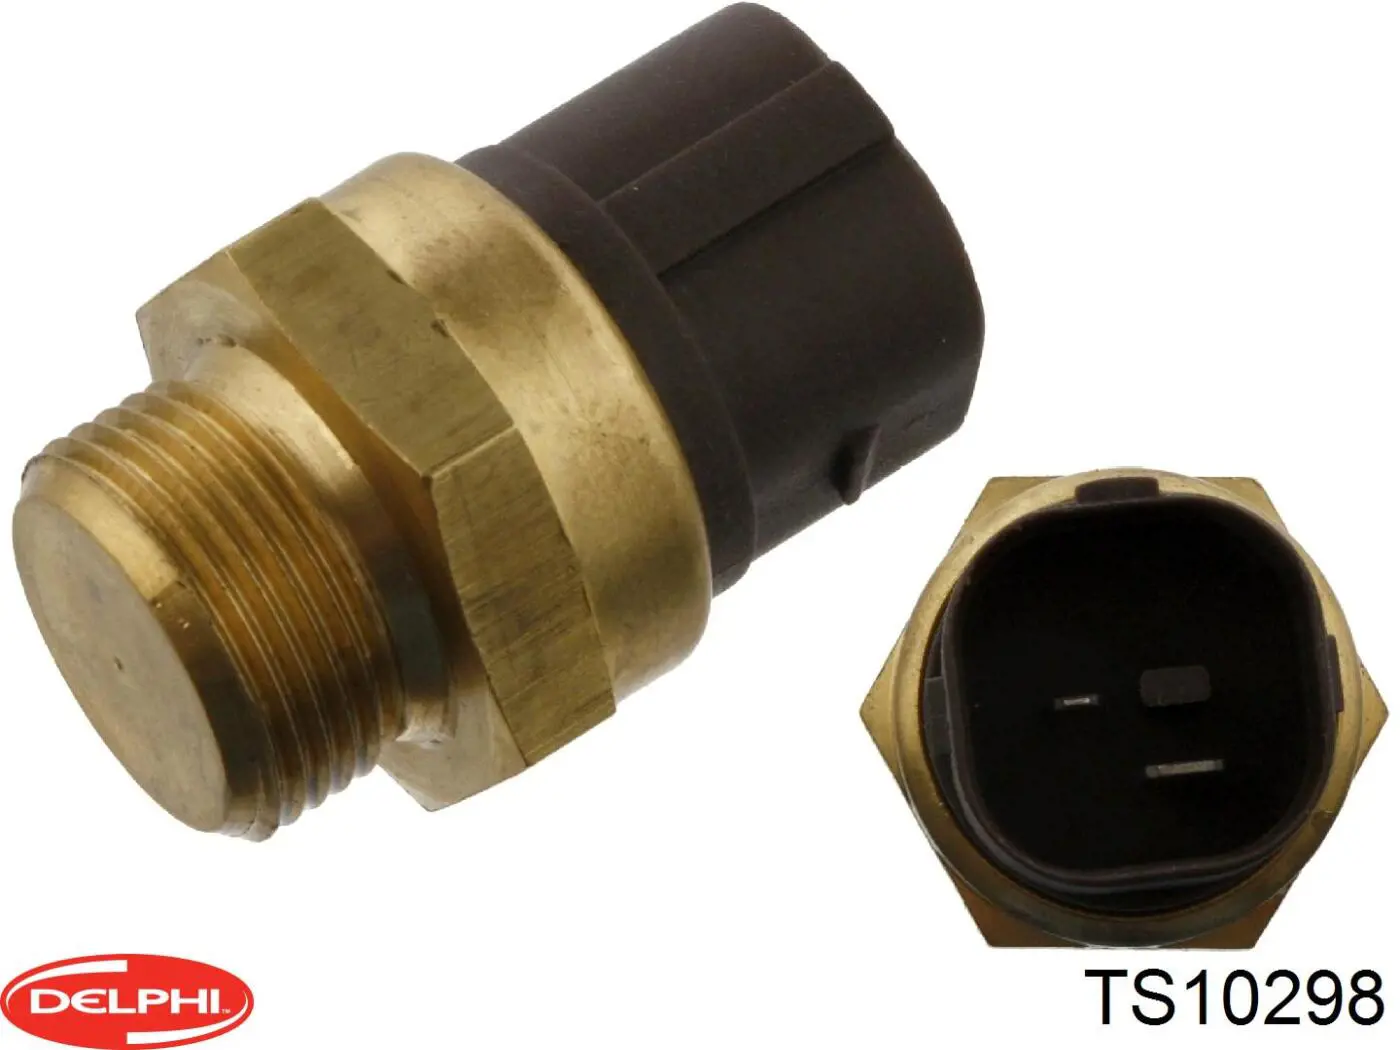 TS10298 Delphi sensor, temperatura del refrigerante (encendido el ventilador del radiador)